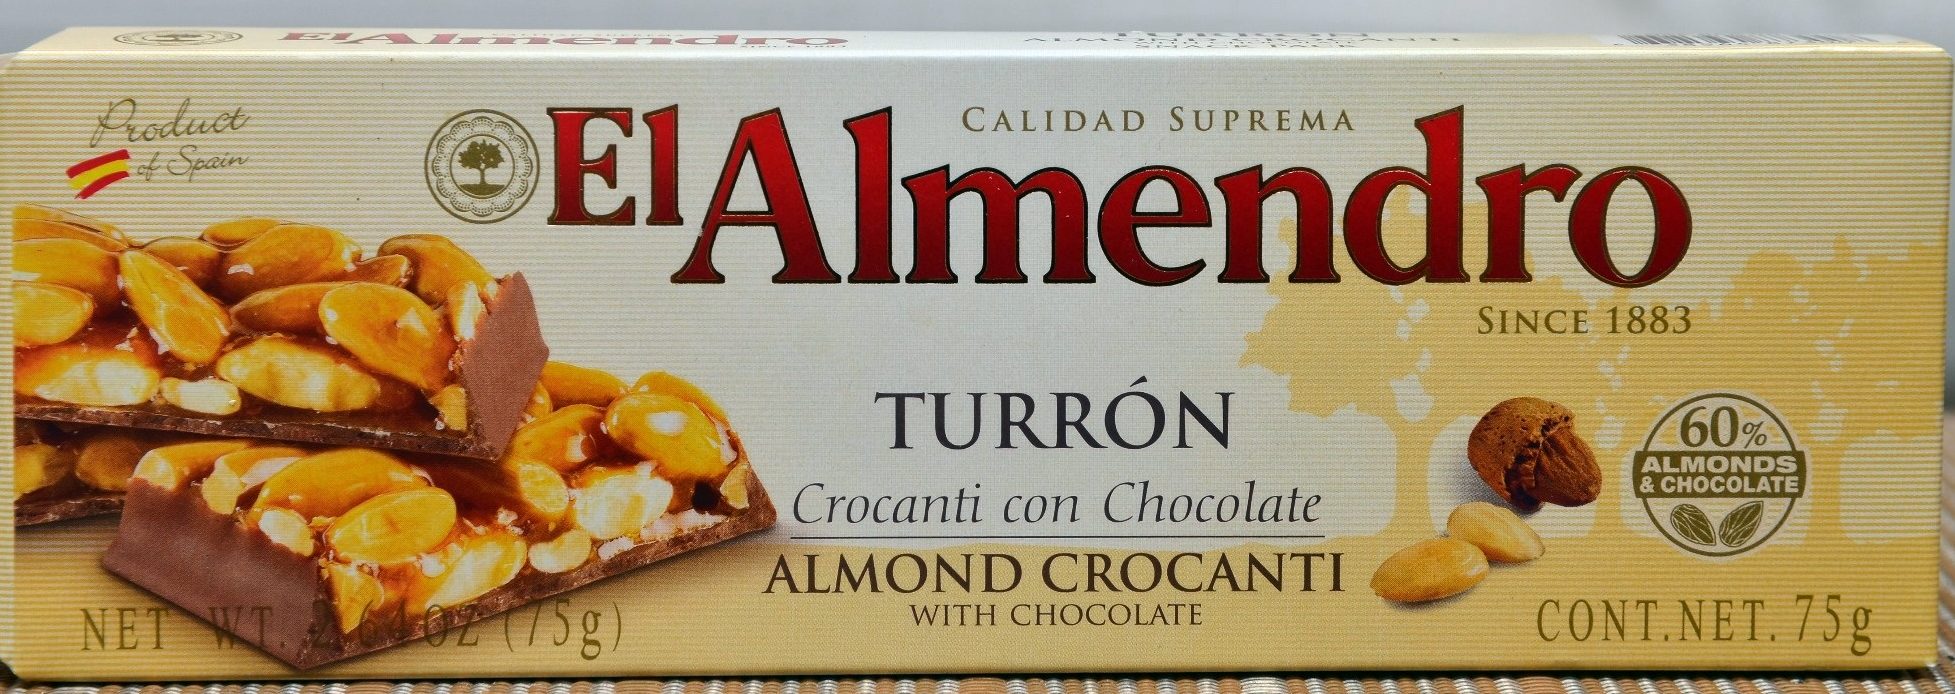 Turron Crocanti con Chocolate - Product - fr